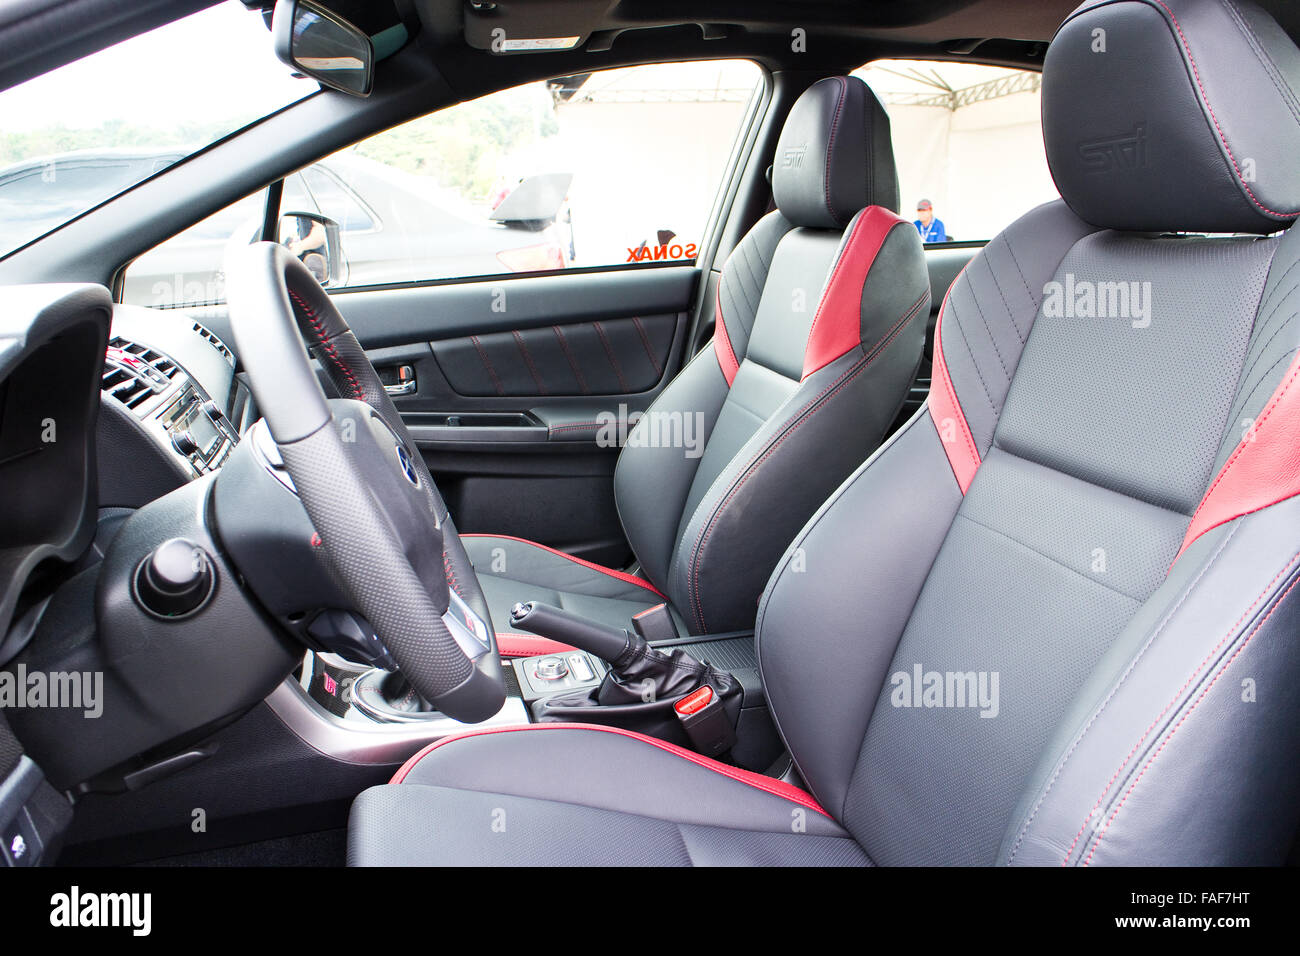 Subaru Wrx Sti 2014 2015 Interior New Sport Seat Inside